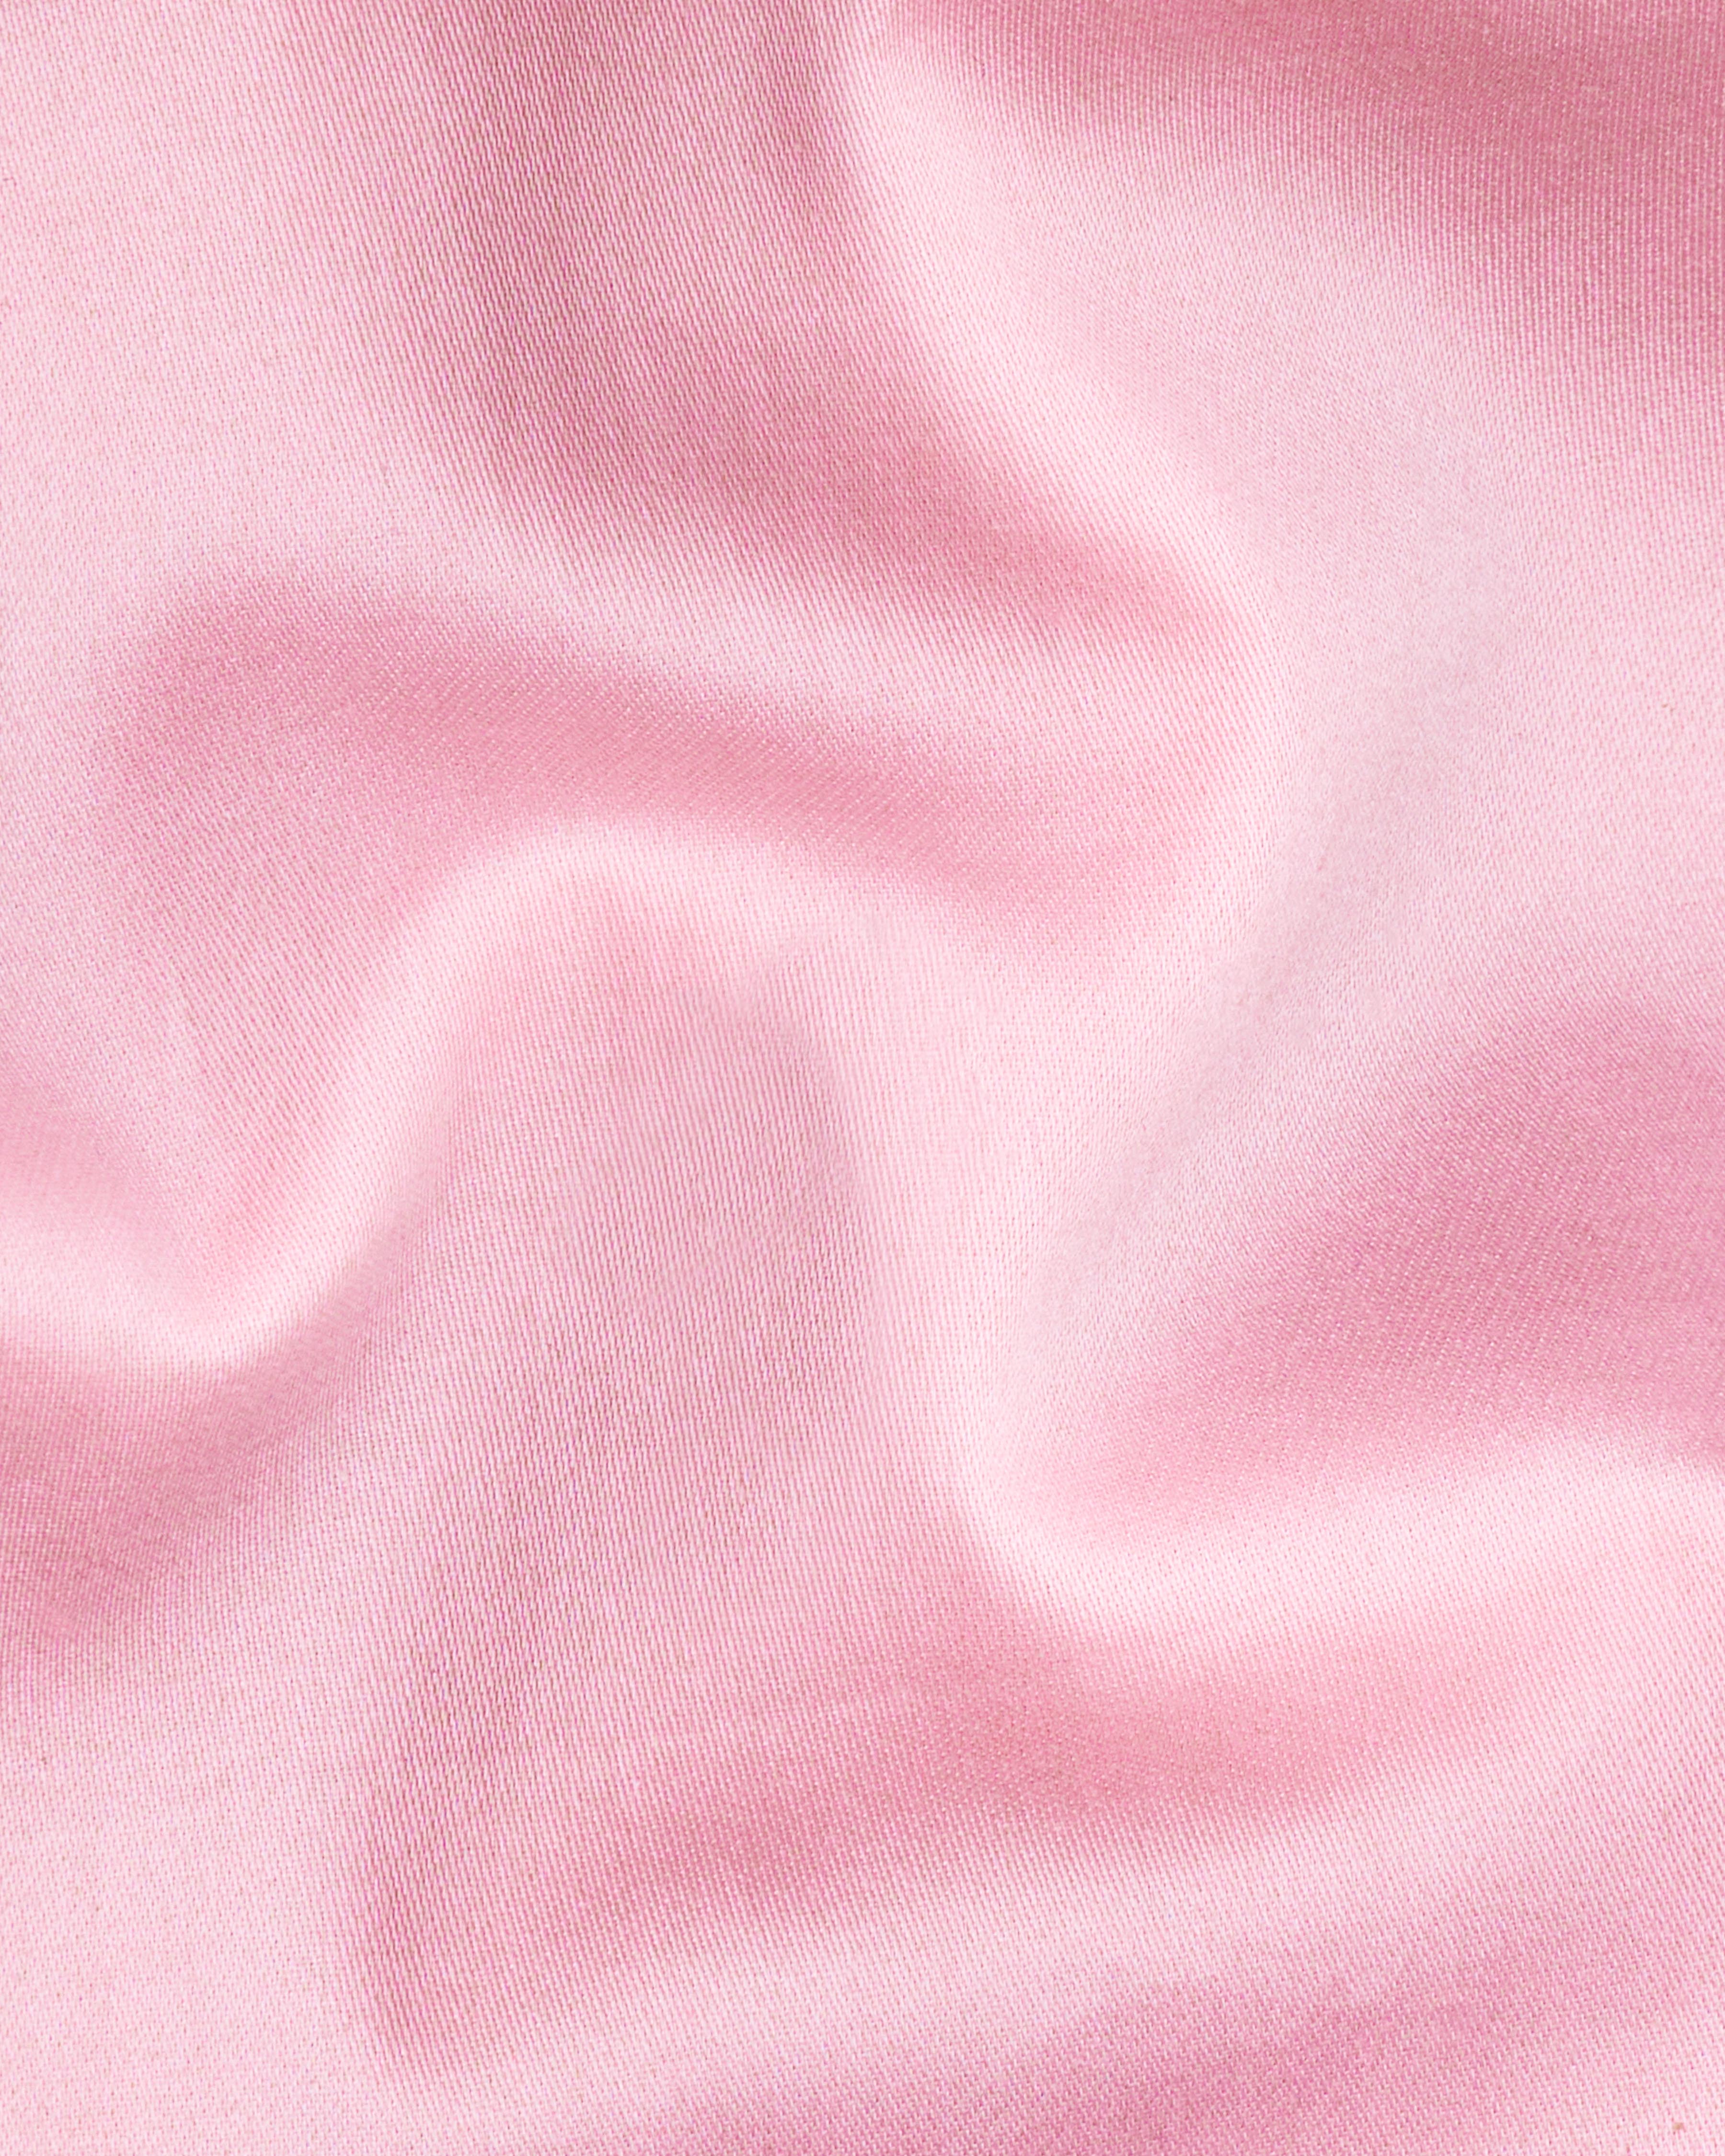 Pastel Pink Super Soft Premium Cotton Shirt  8683-BLK-38,8683-BLK-H-38,8683-BLK-39,8683-BLK-H-39,8683-BLK-40,8683-BLK-H-40,8683-BLK-42,8683-BLK-H-42,8683-BLK-44,8683-BLK-H-44,8683-BLK-46,8683-BLK-H-46,8683-BLK-48,8683-BLK-H-48,8683-BLK-50,8683-BLK-H-50,8683-BLK-52,8683-BLK-H-52